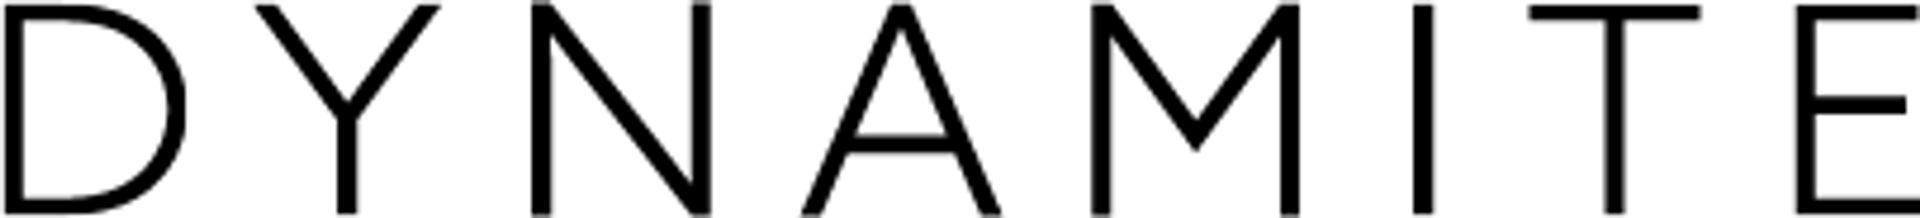 DYNAMITE CLOTHING logo de circulaire